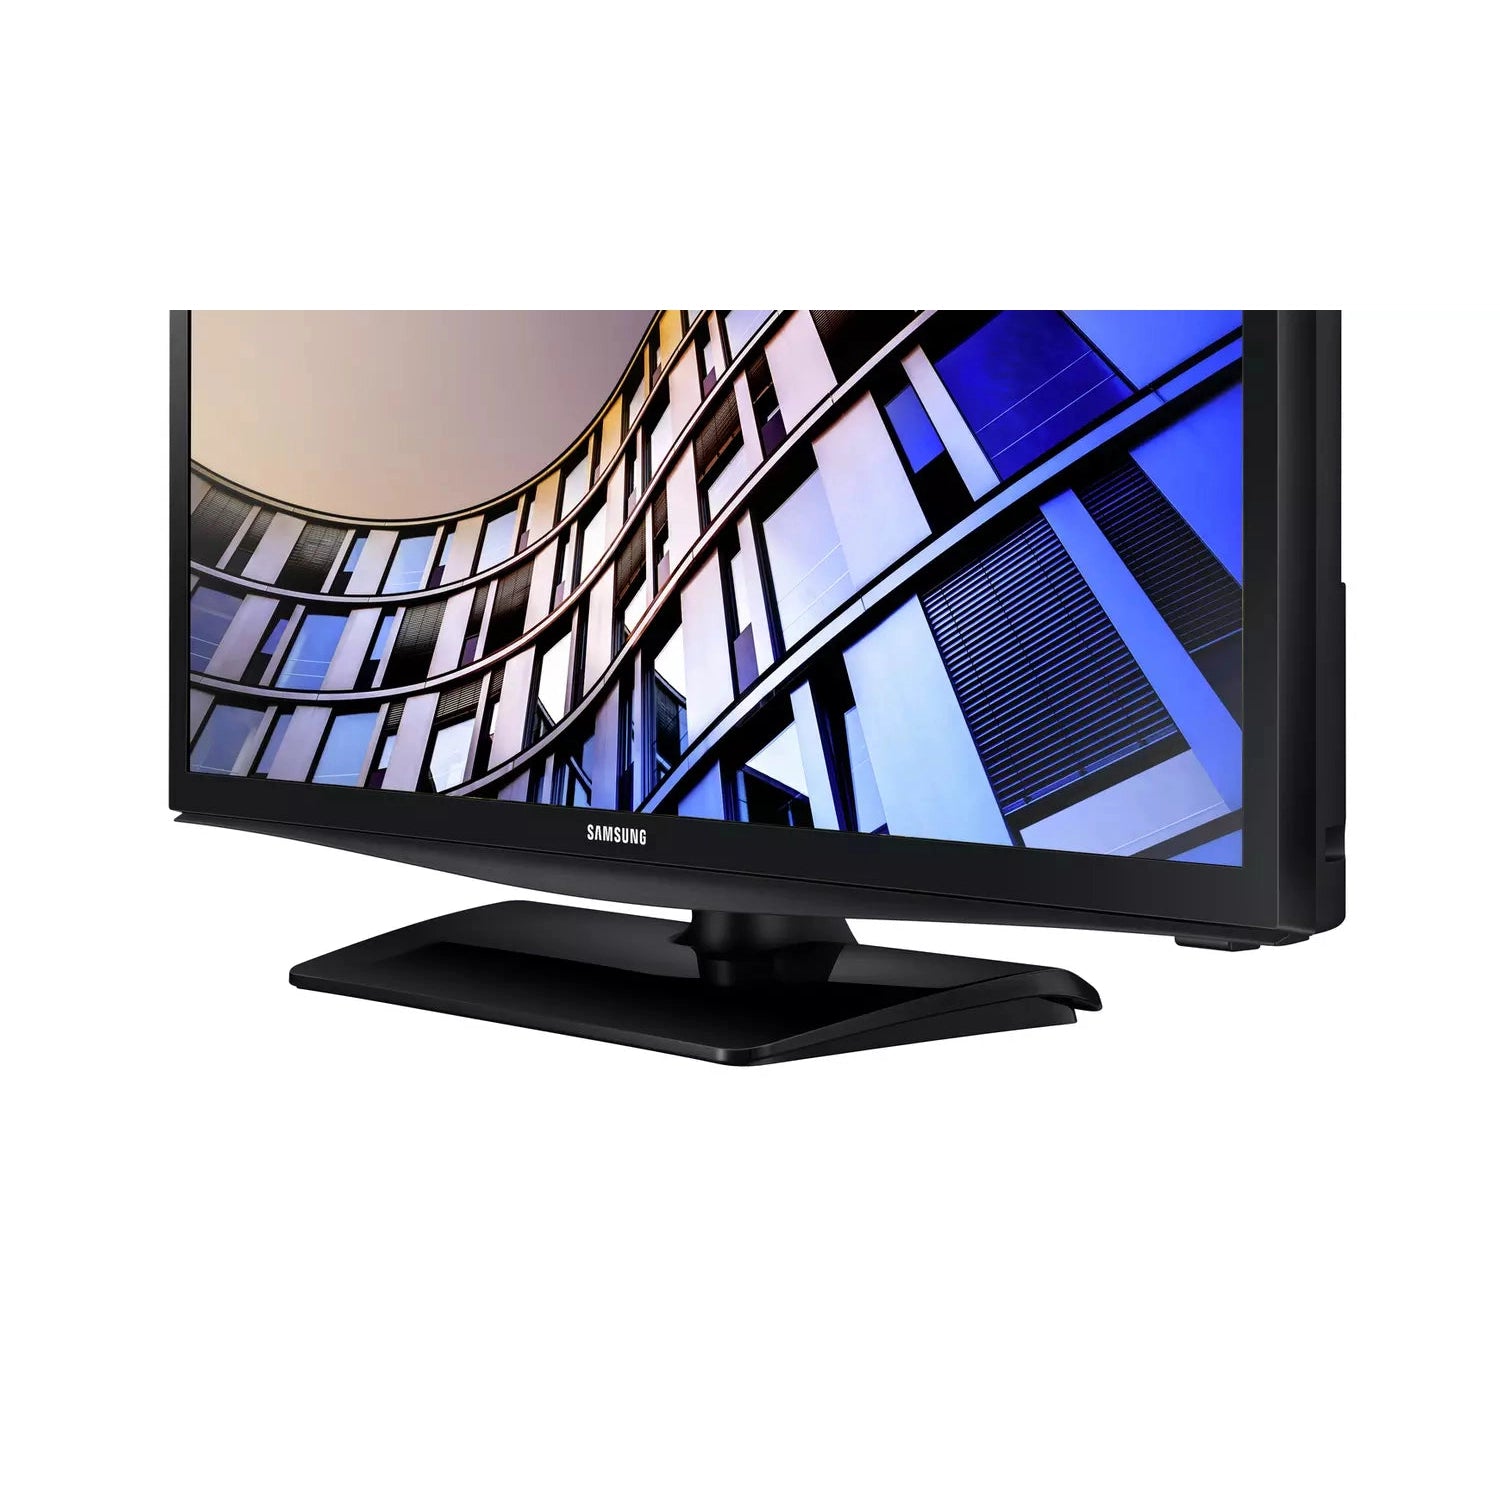 Samsung 24 Inch UE24N4300 Smart HD Ready TV - Refurbished Excellent